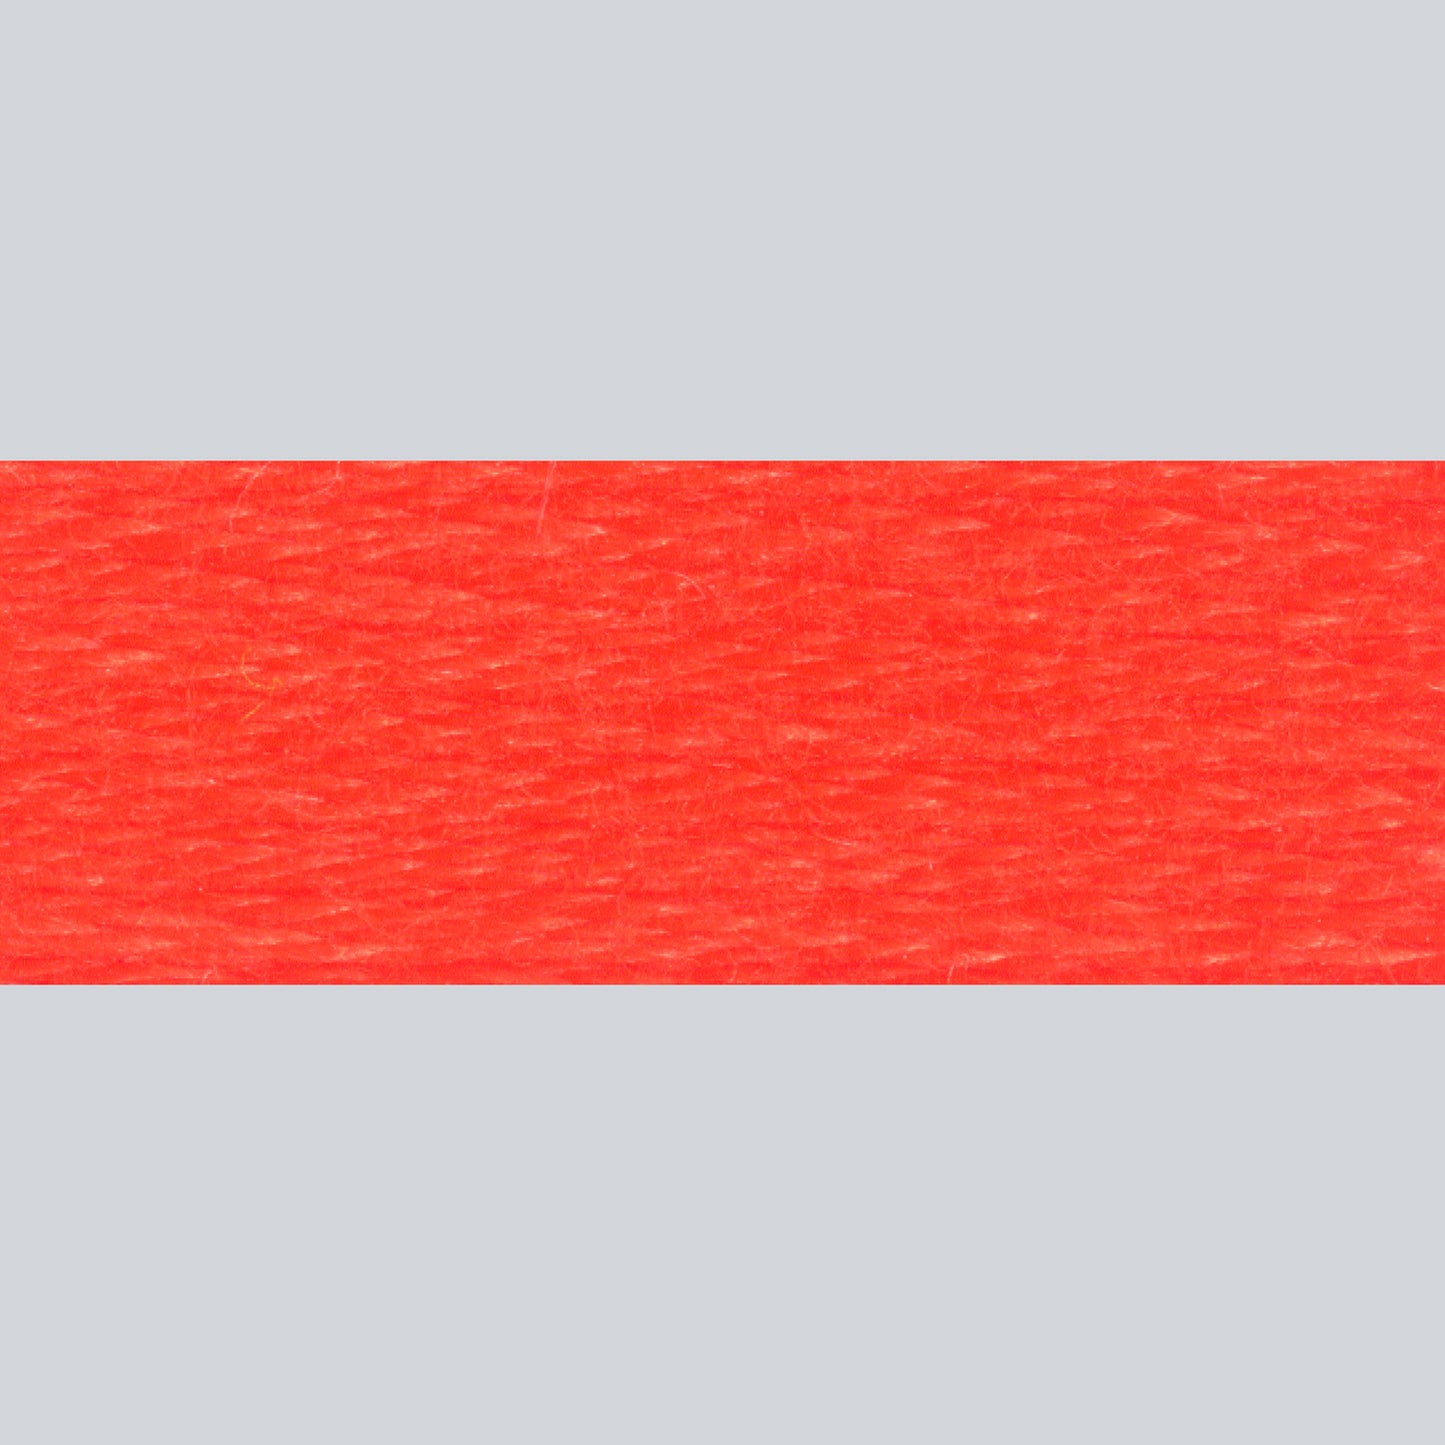 DMC Embroidery Floss - 606 Bright Orange-Red Alternative View #1